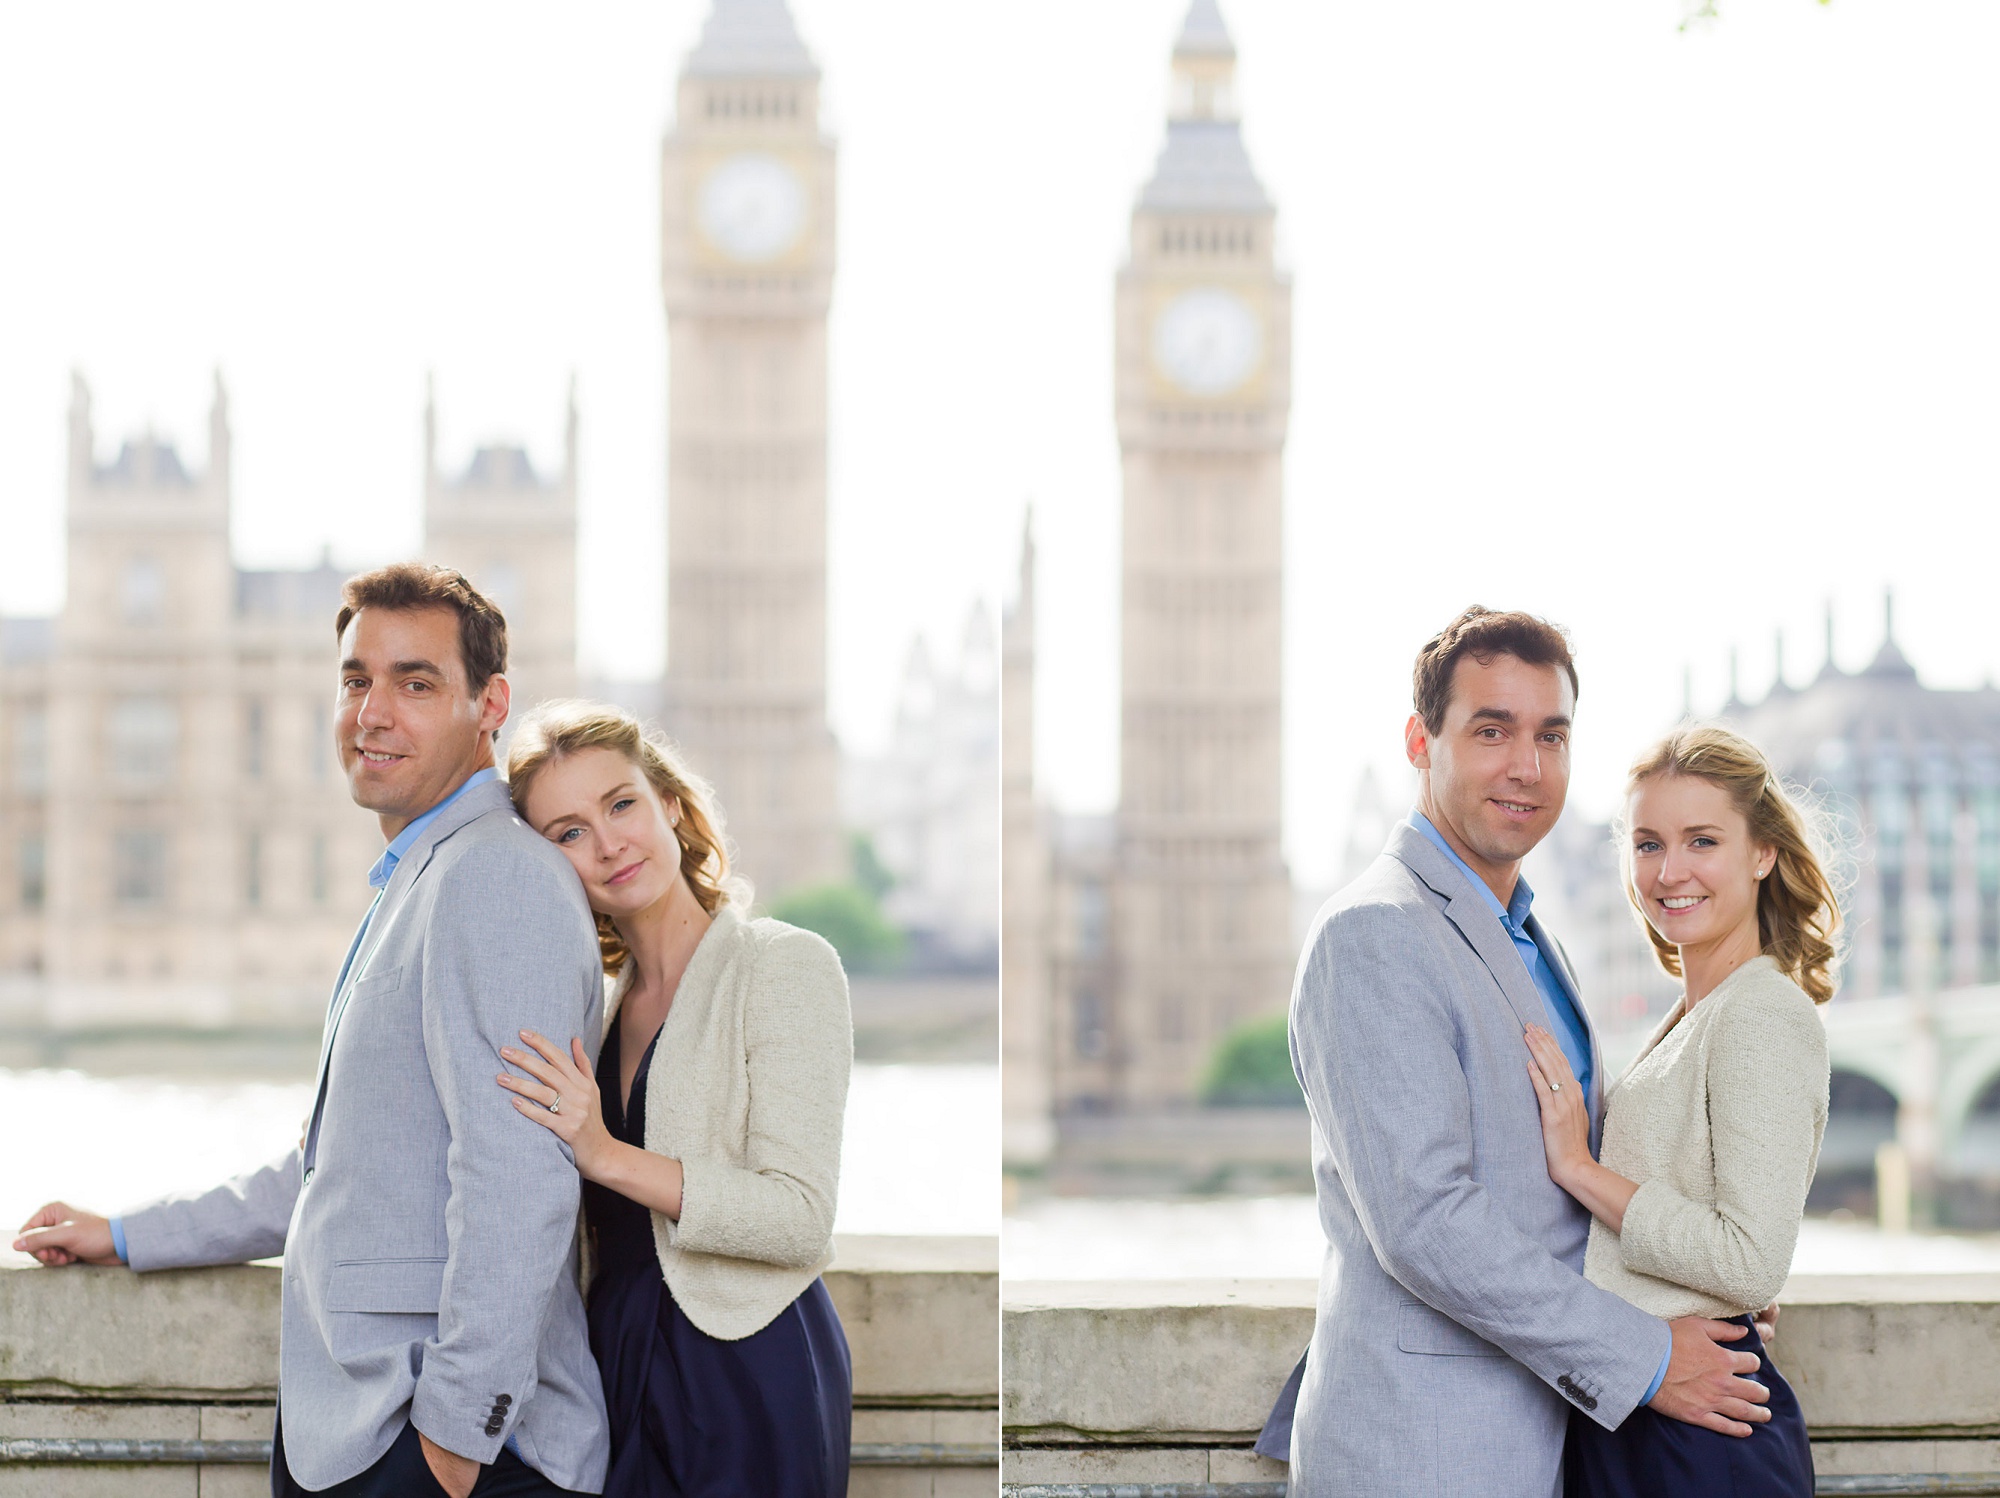 engagement photos across from big ben london